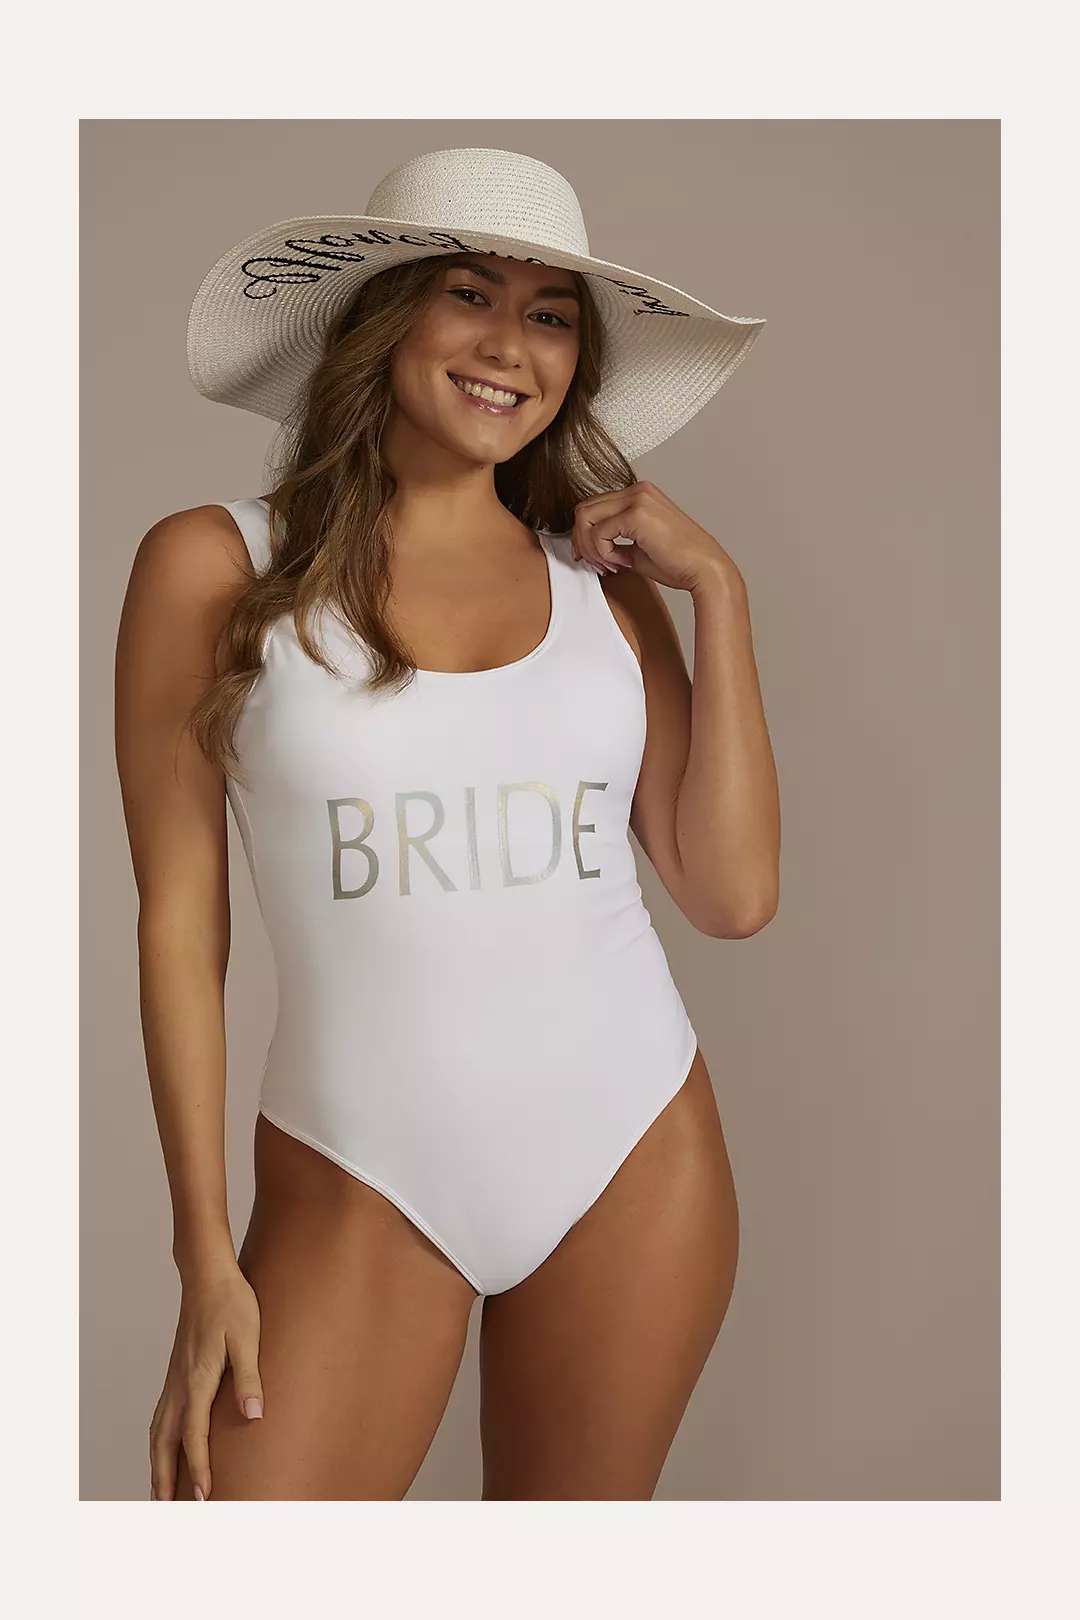 Iridescent Bride One-Piece Bathing Suit Image